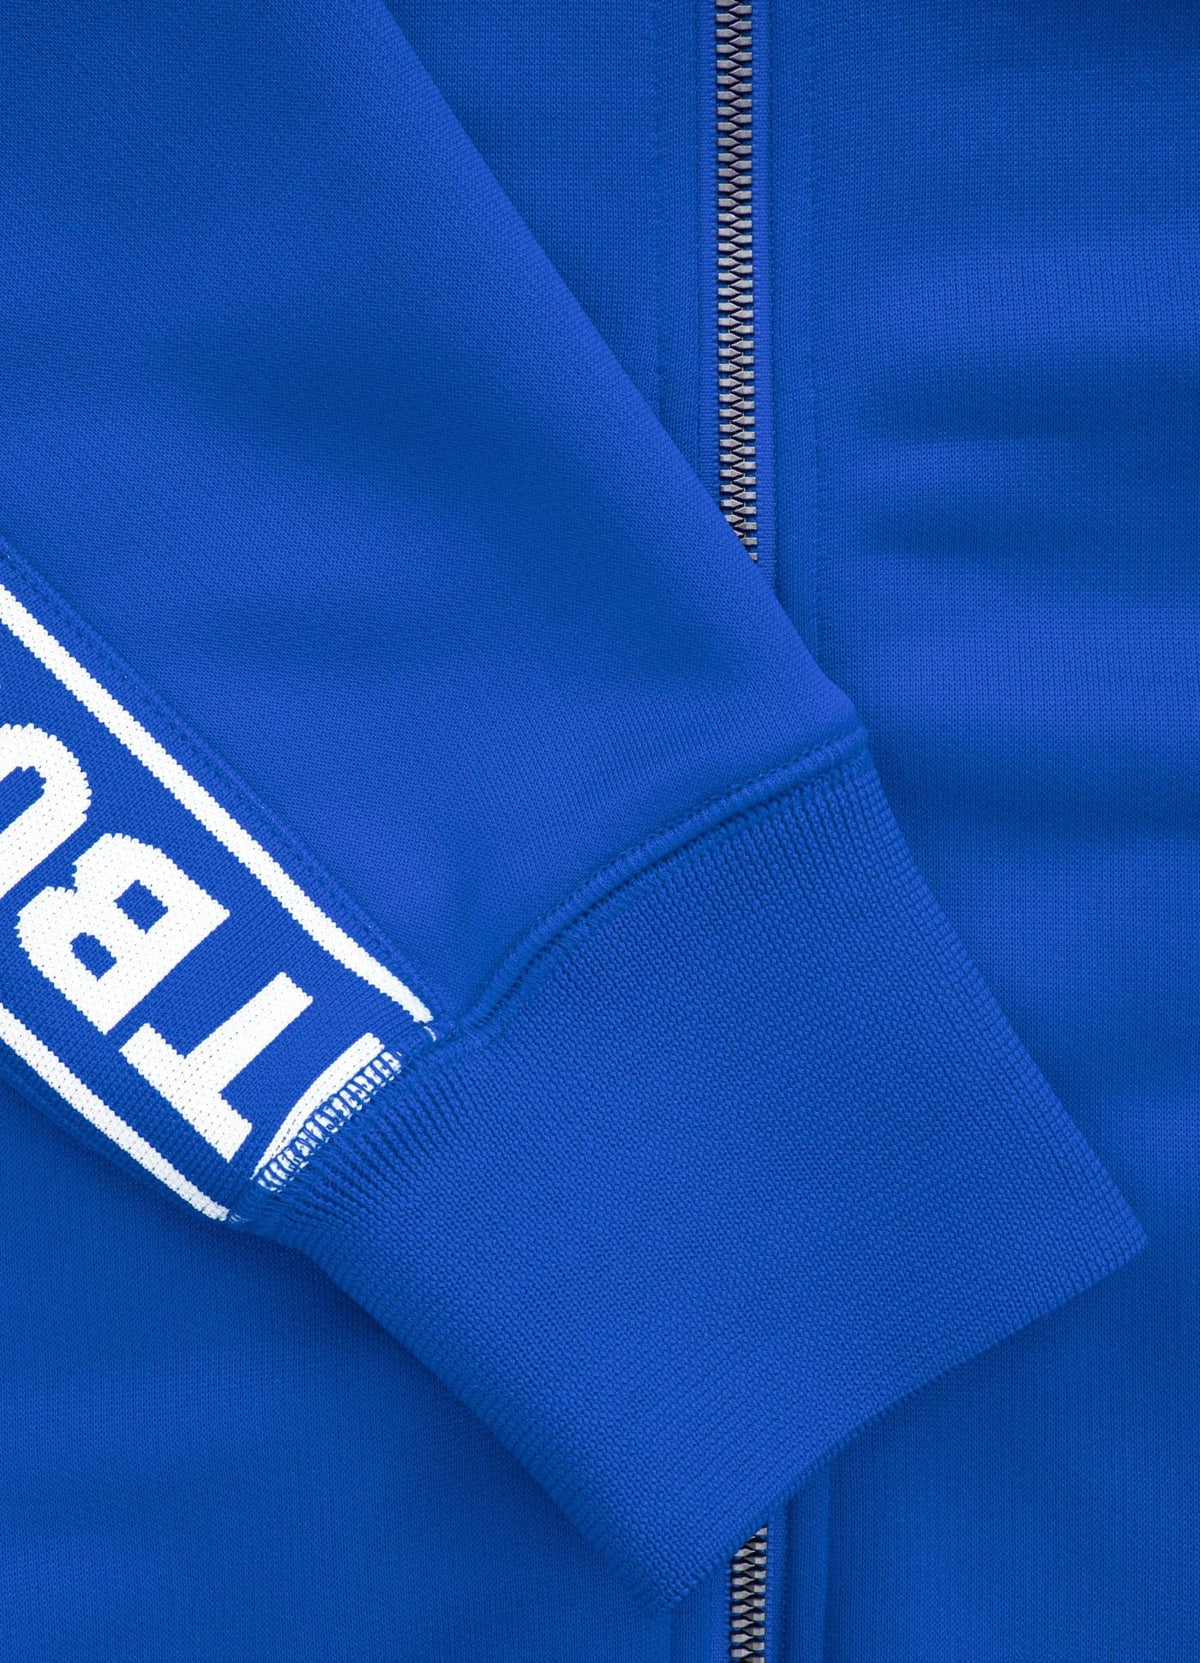 TAPE LOGO Blue Zip Sweatshirt - Pitbullstore.eu